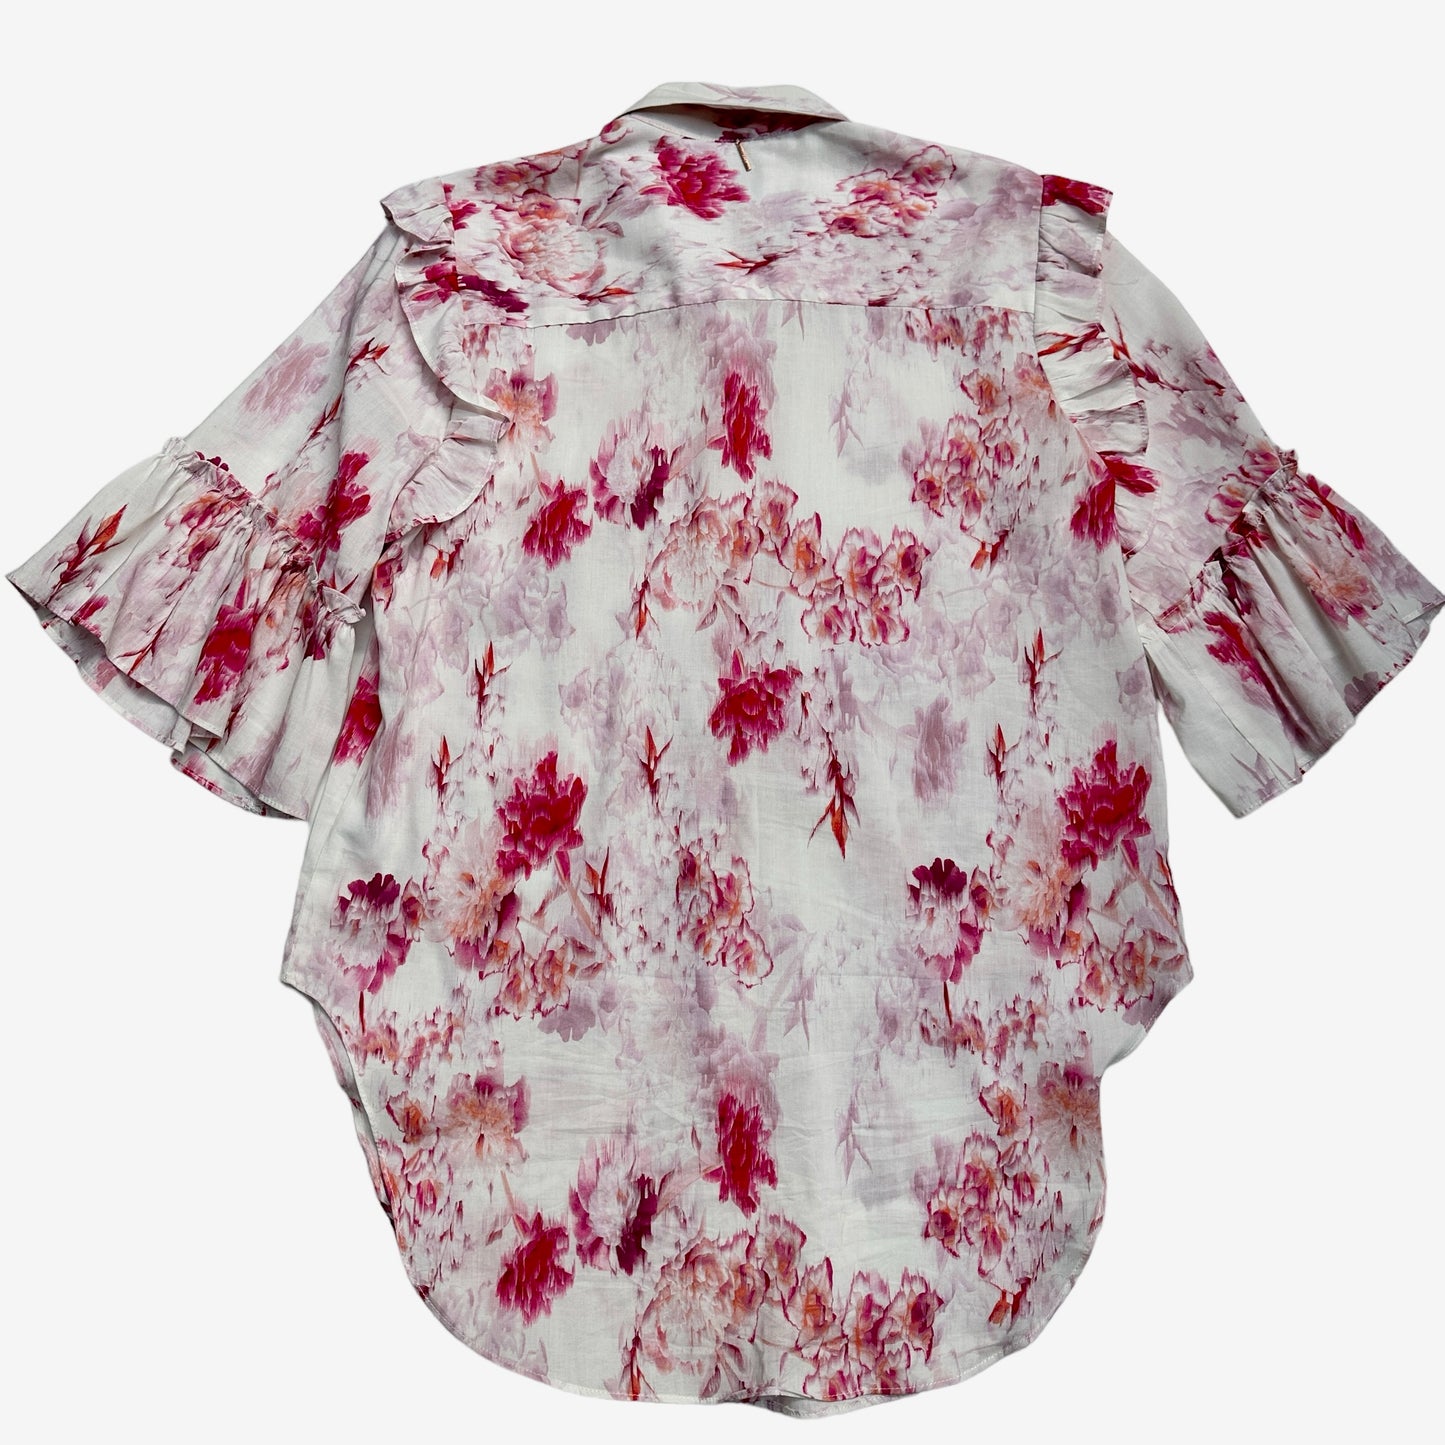 Flower Print Shirt - S